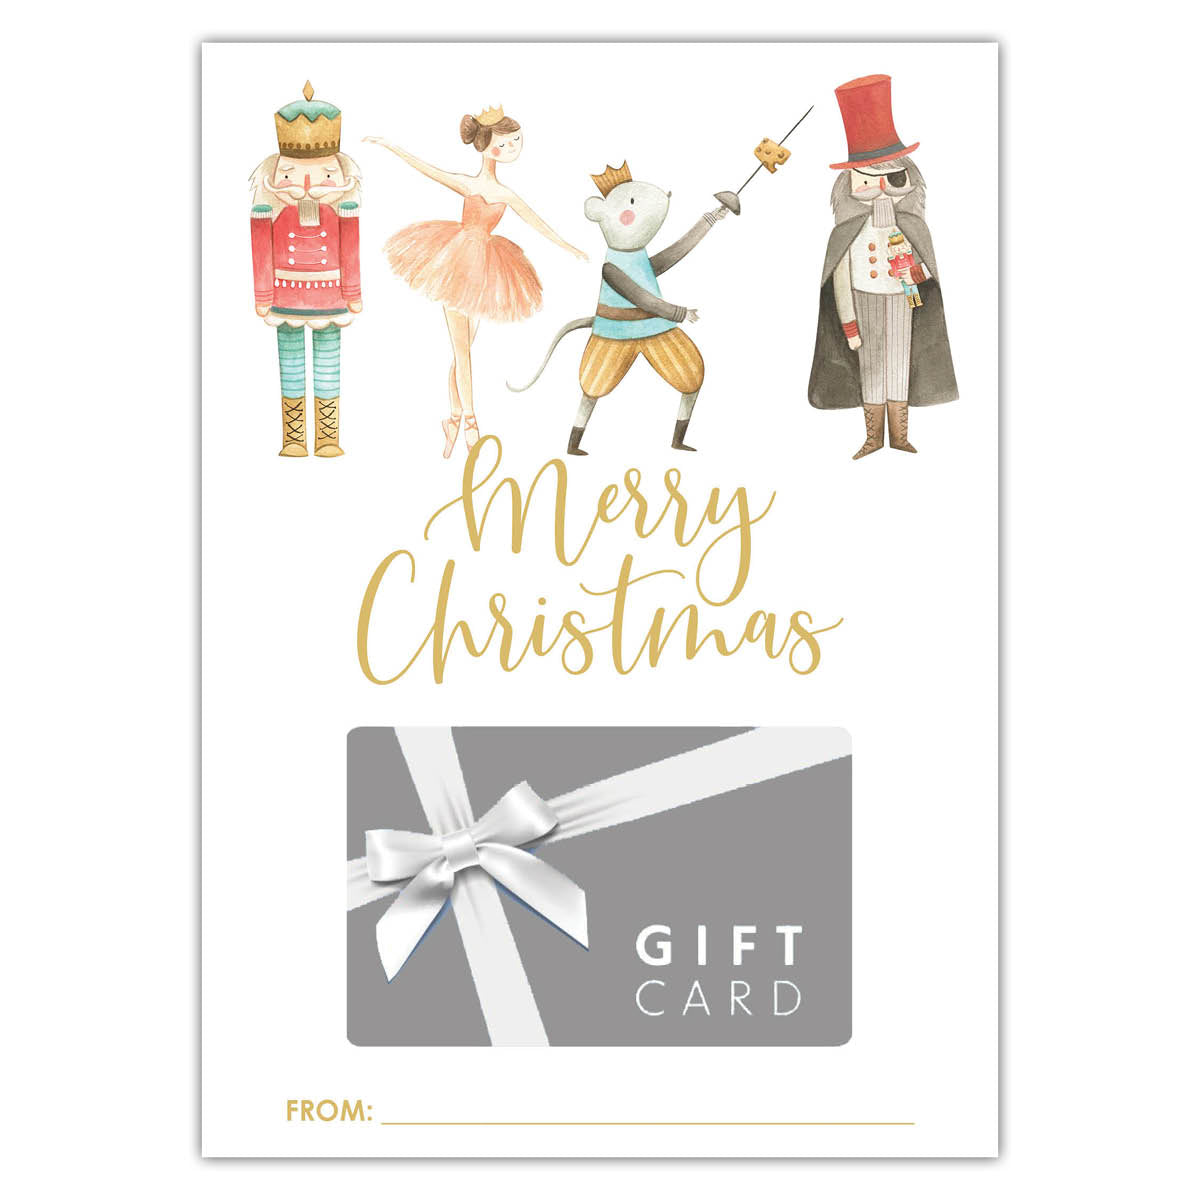 Printable 5x7 Chick-fil-A Gift Card Holder for Teacher Gift | Instant  Digital Download